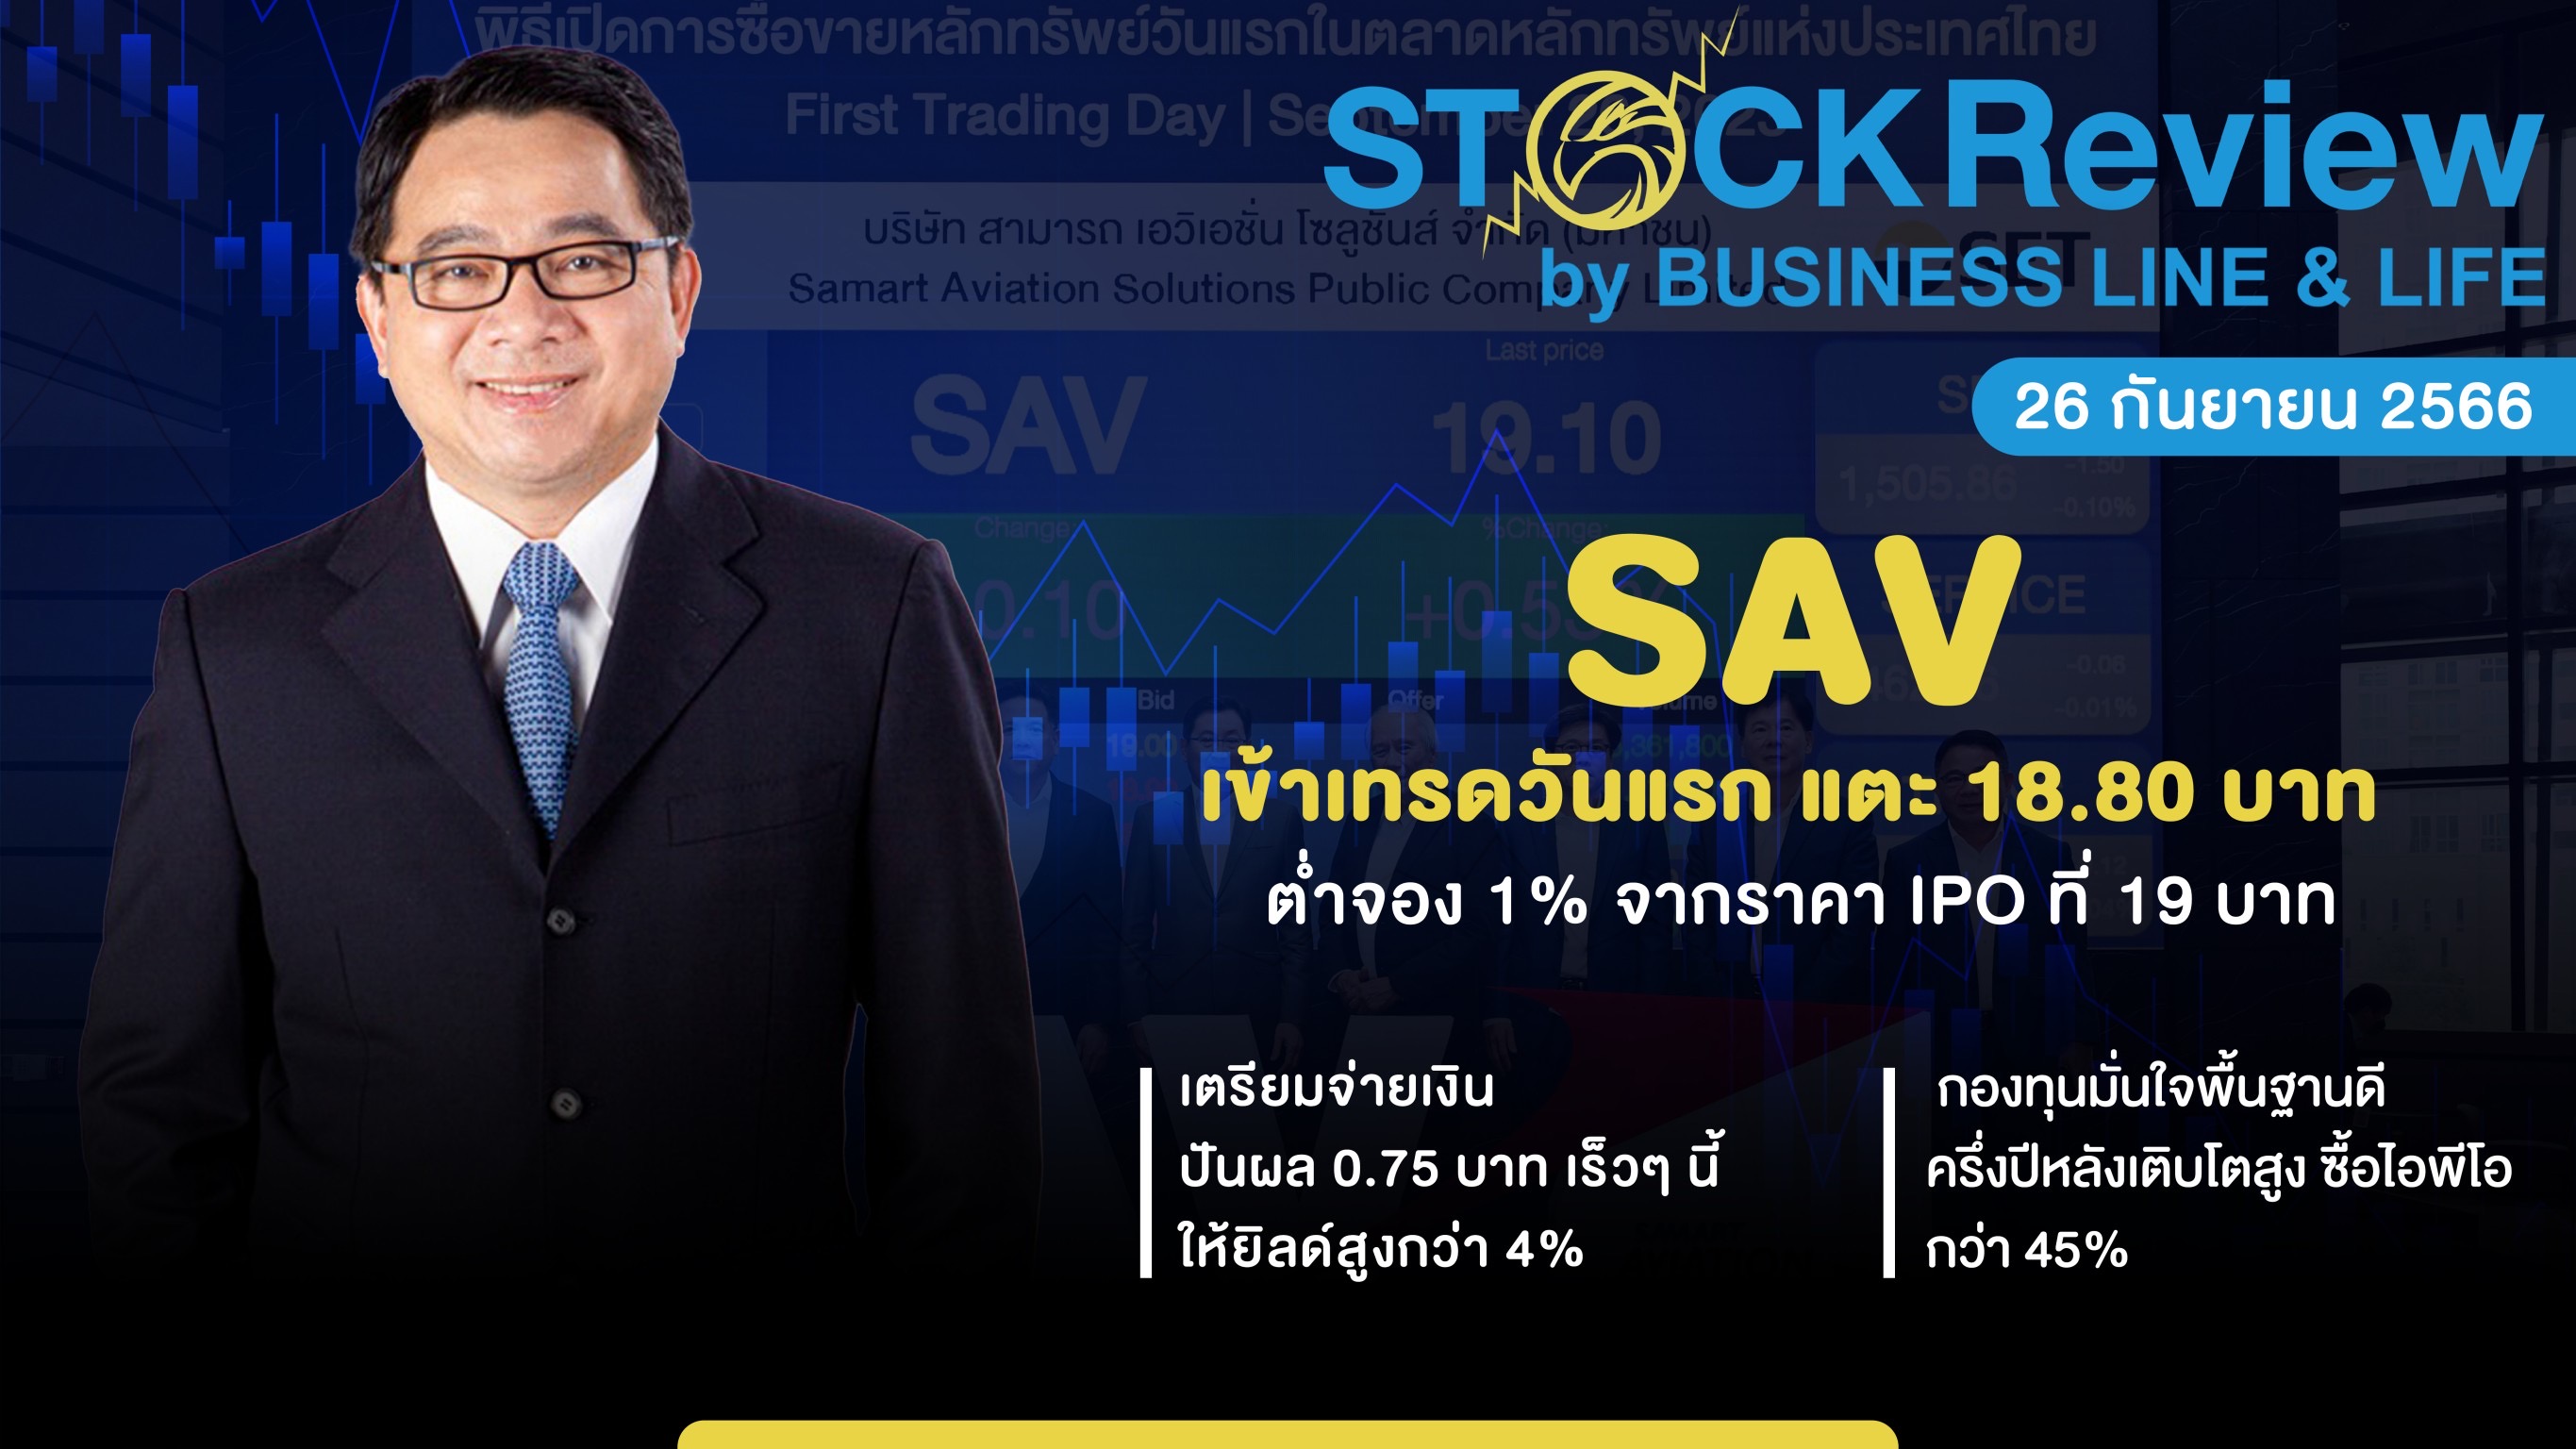 SAV เทรดวันแรก แตะ 18.80 บาท  ต่ำจอง 1% จากราคา IPO ที่ 19 บาท